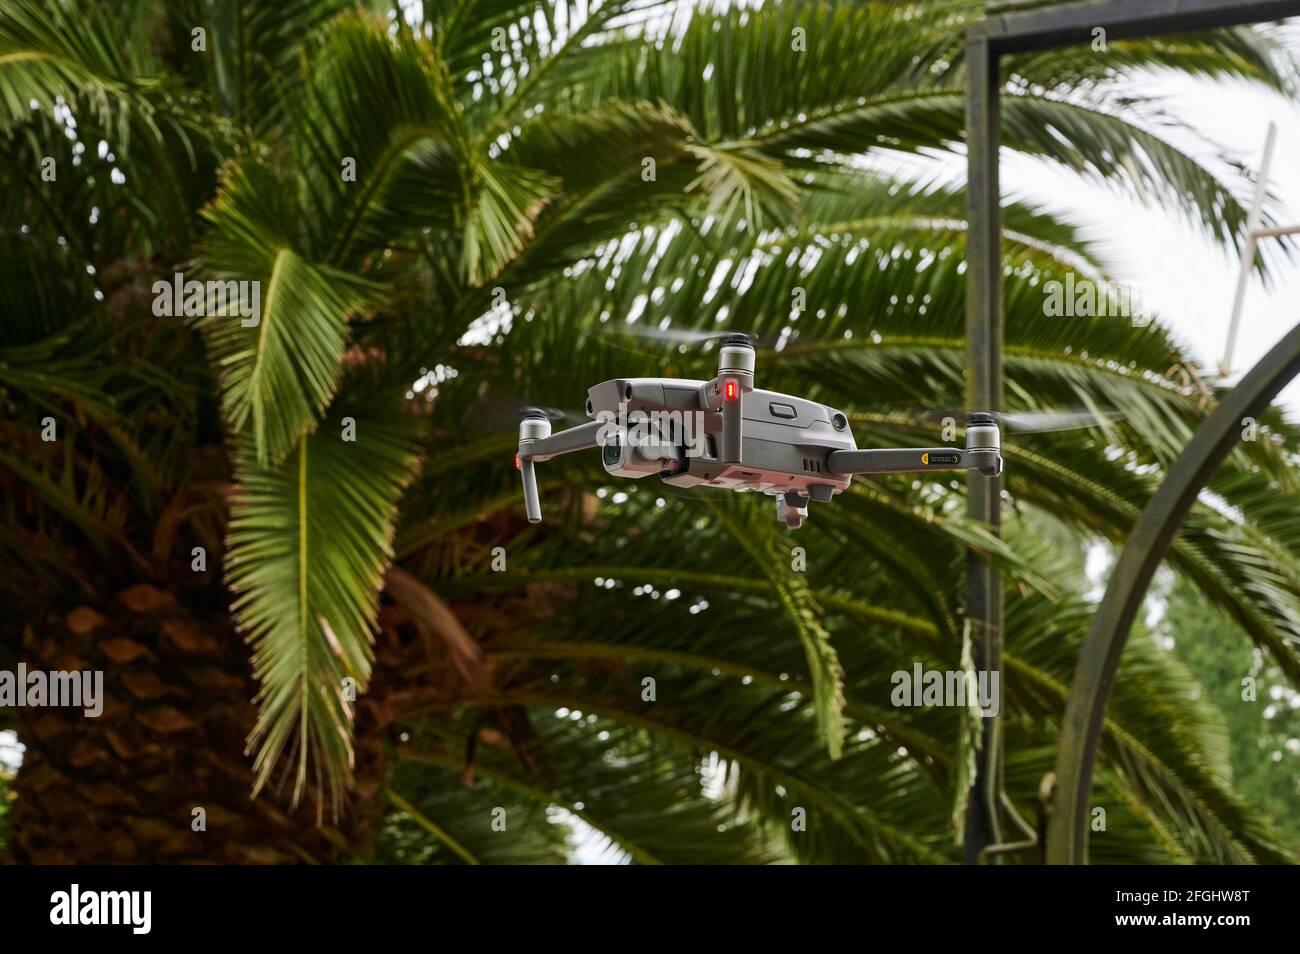 Drone Mavic 2 in flight Stock Photo